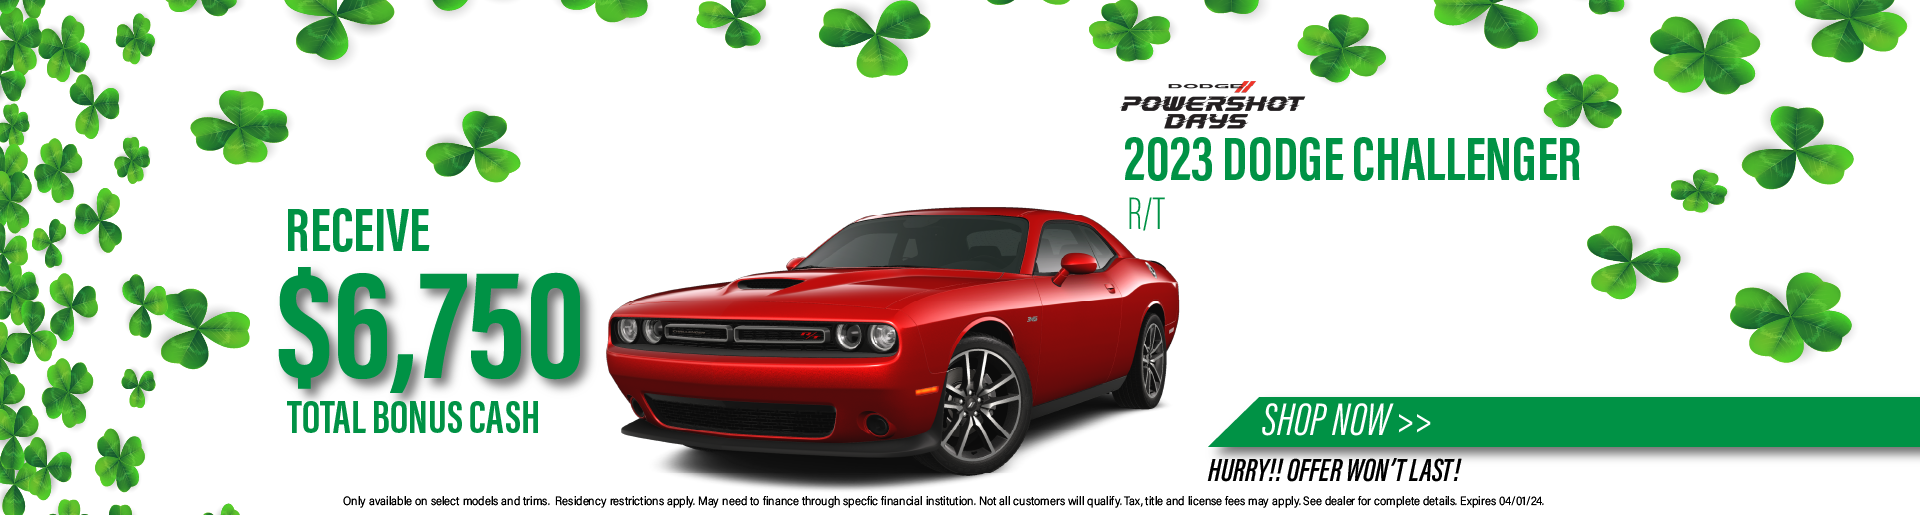 2023 Dodge Challenger bonus cash